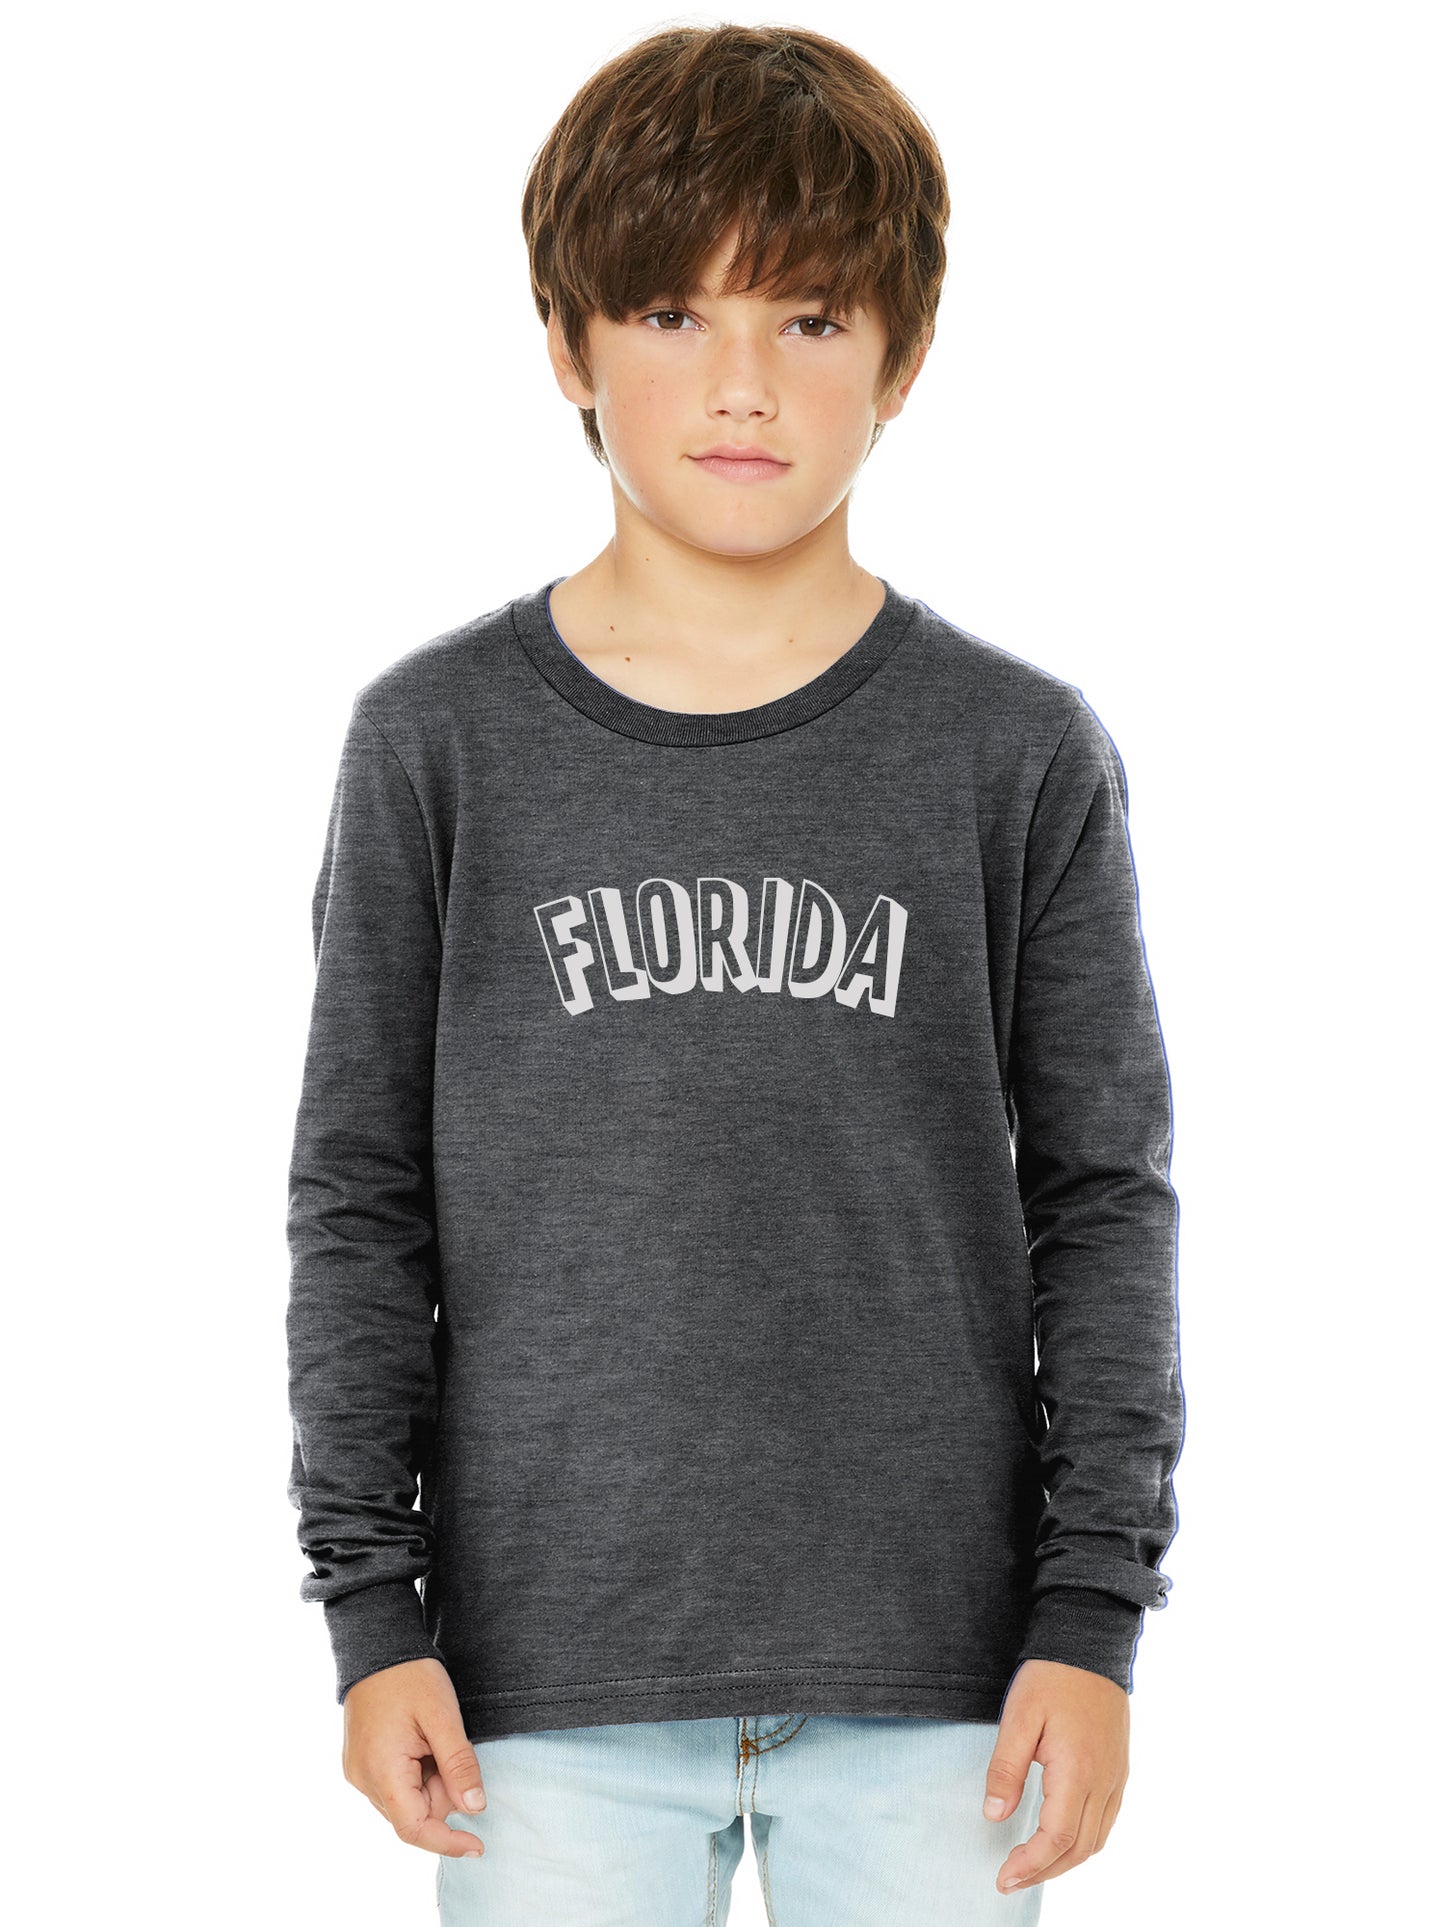 Daxton Youth Long Sleeve Florida Basic Tshirt